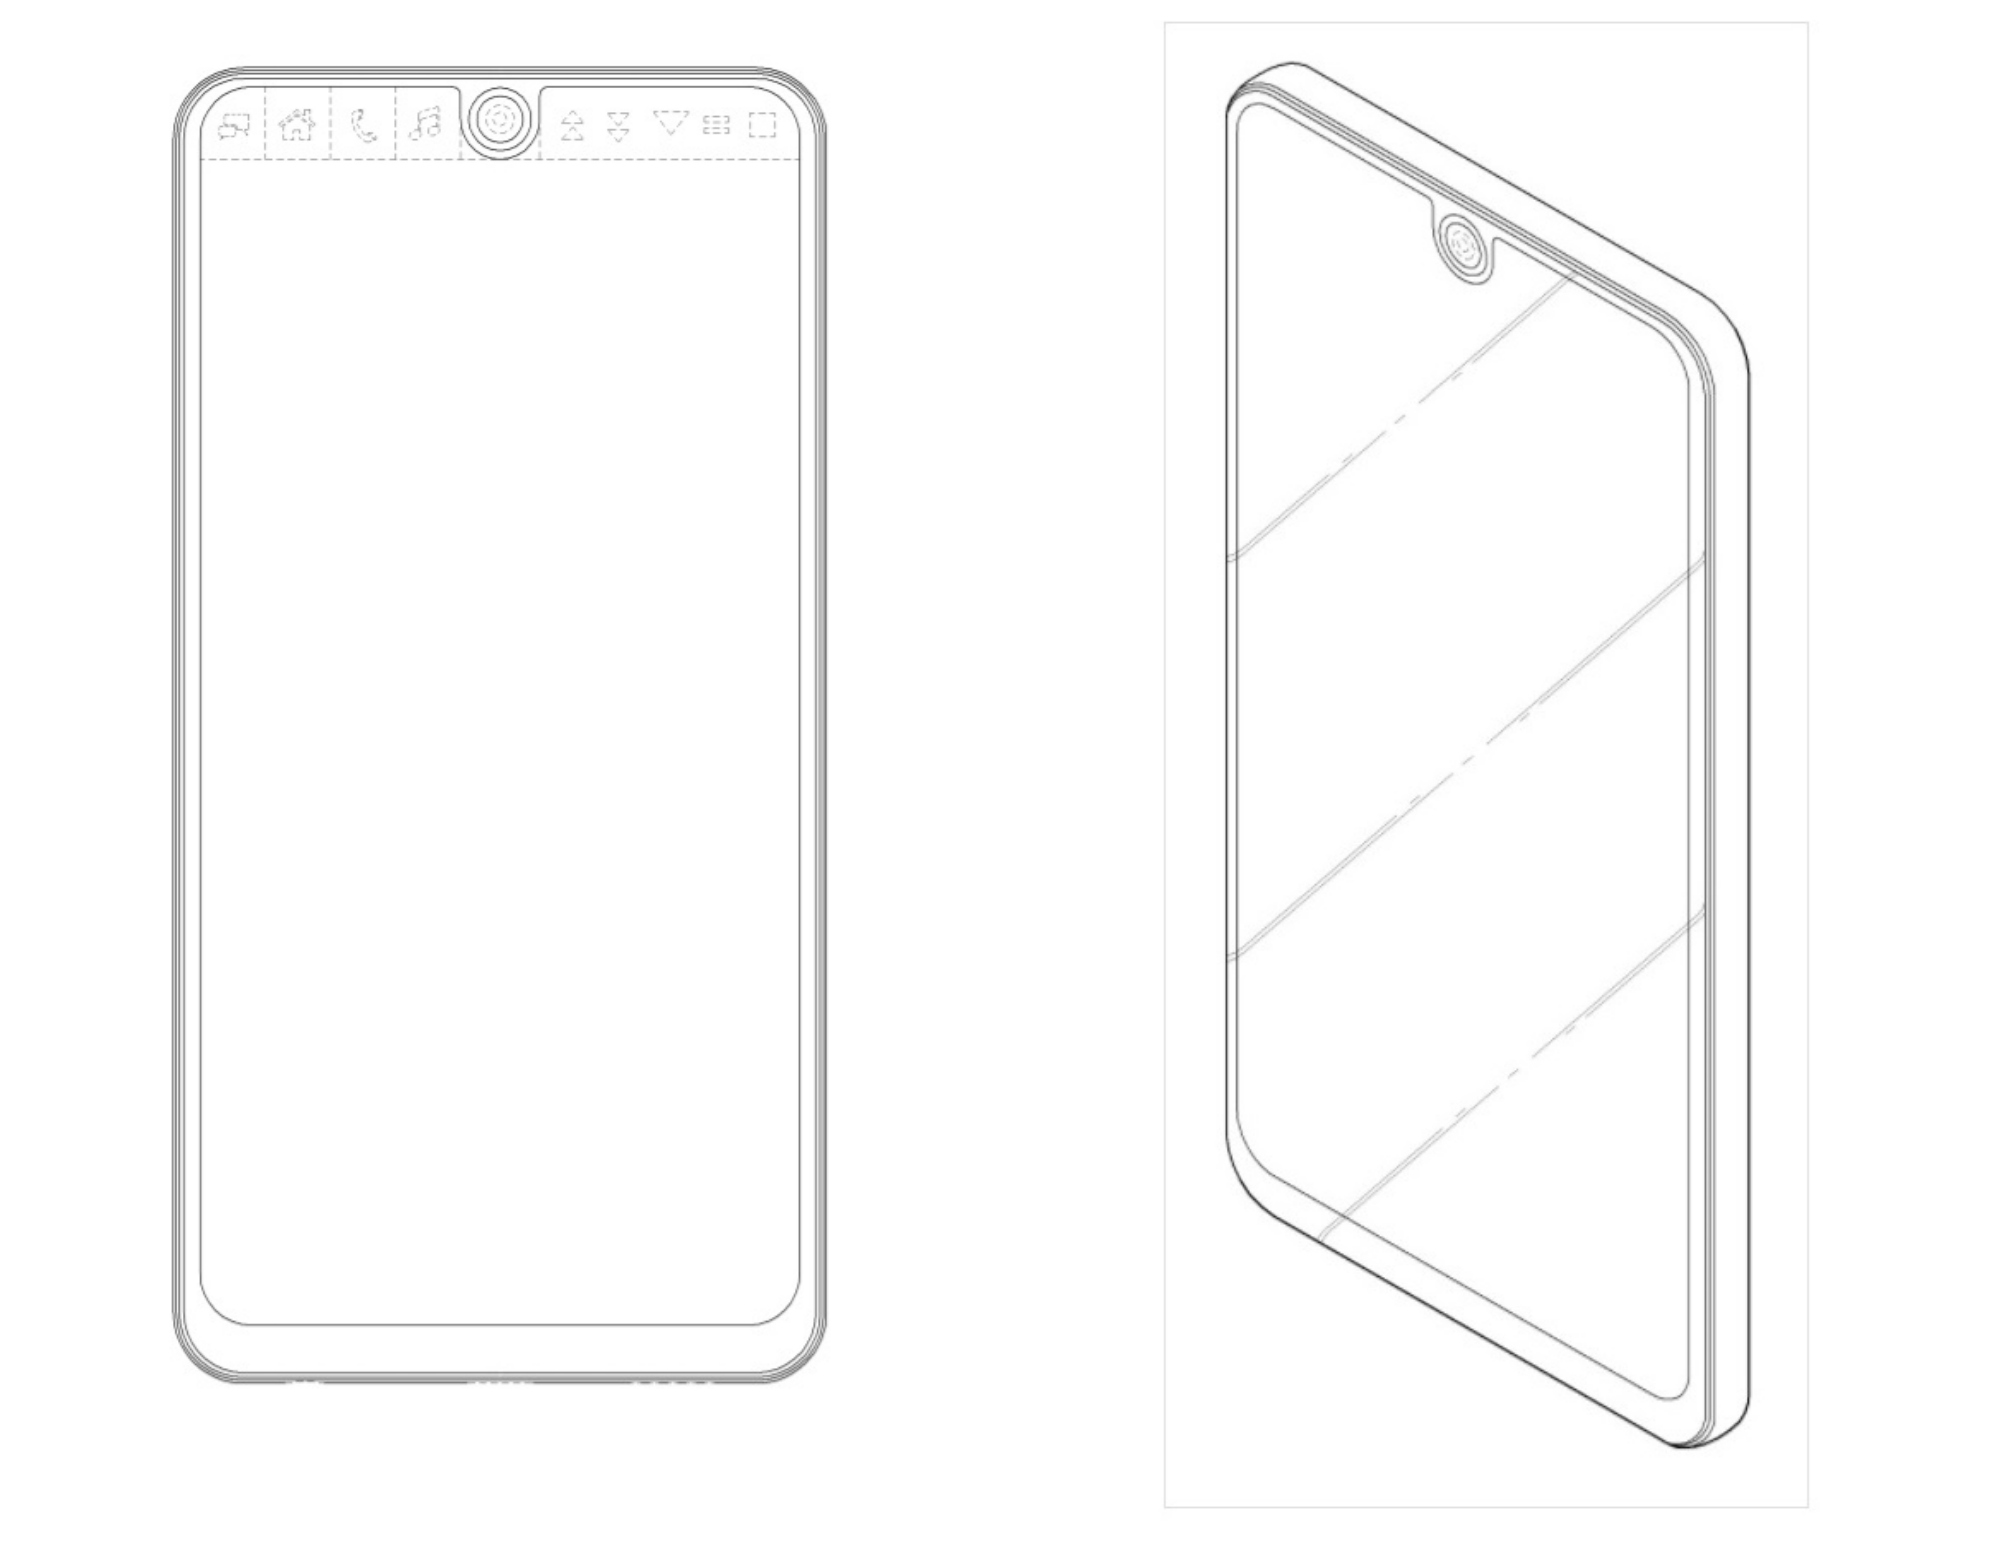 LG smartphone design patent with notch